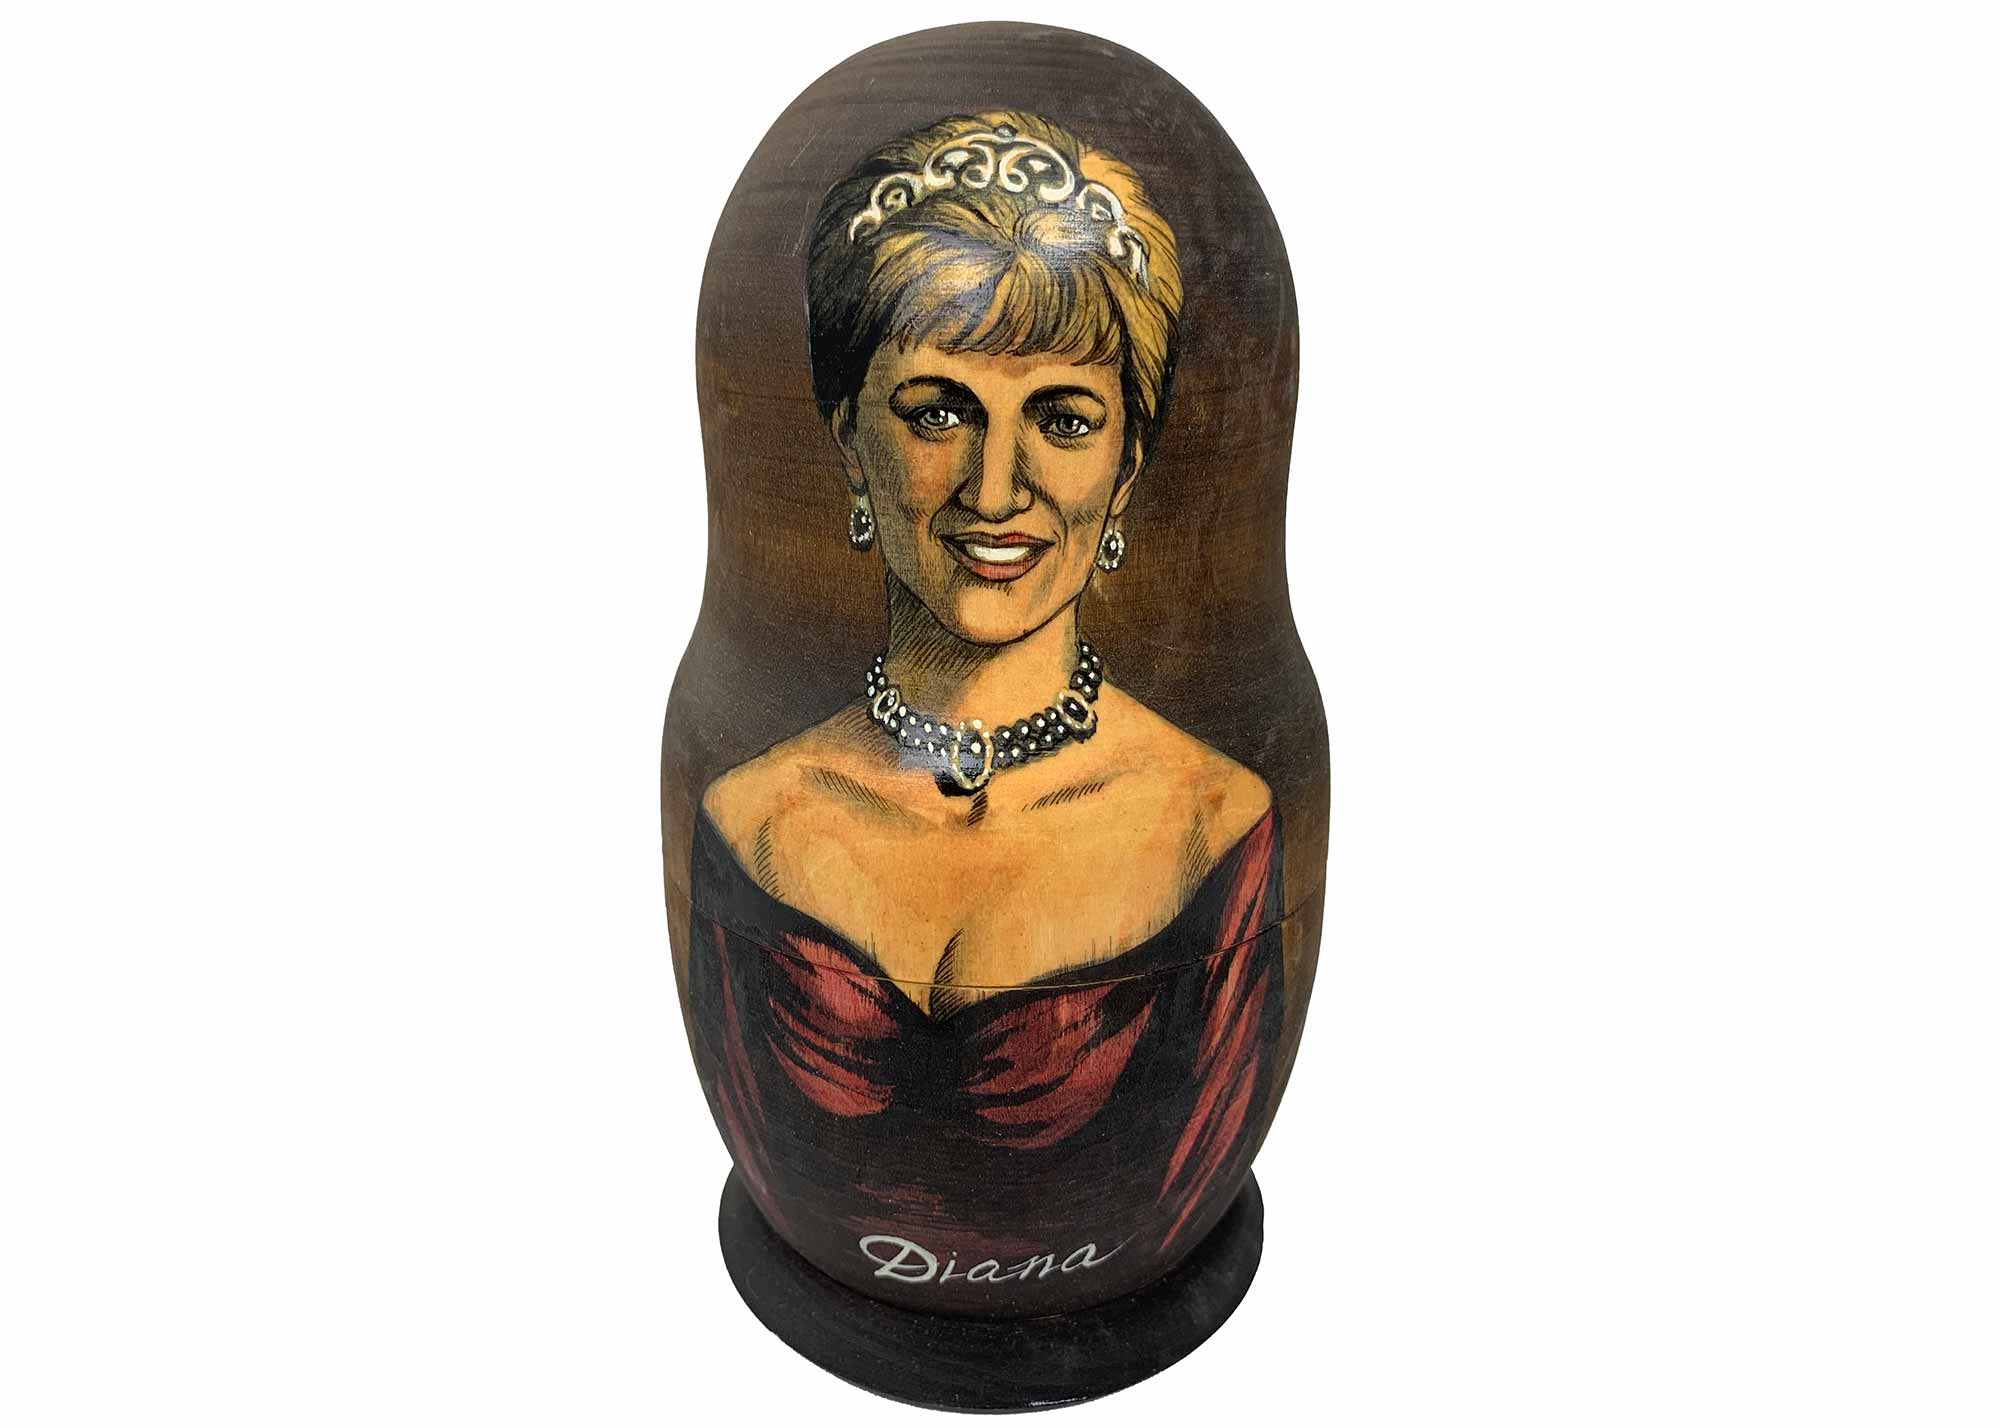 Buy Vintage Princess Diana Nesting Doll 5pc./6" at GoldenCockerel.com